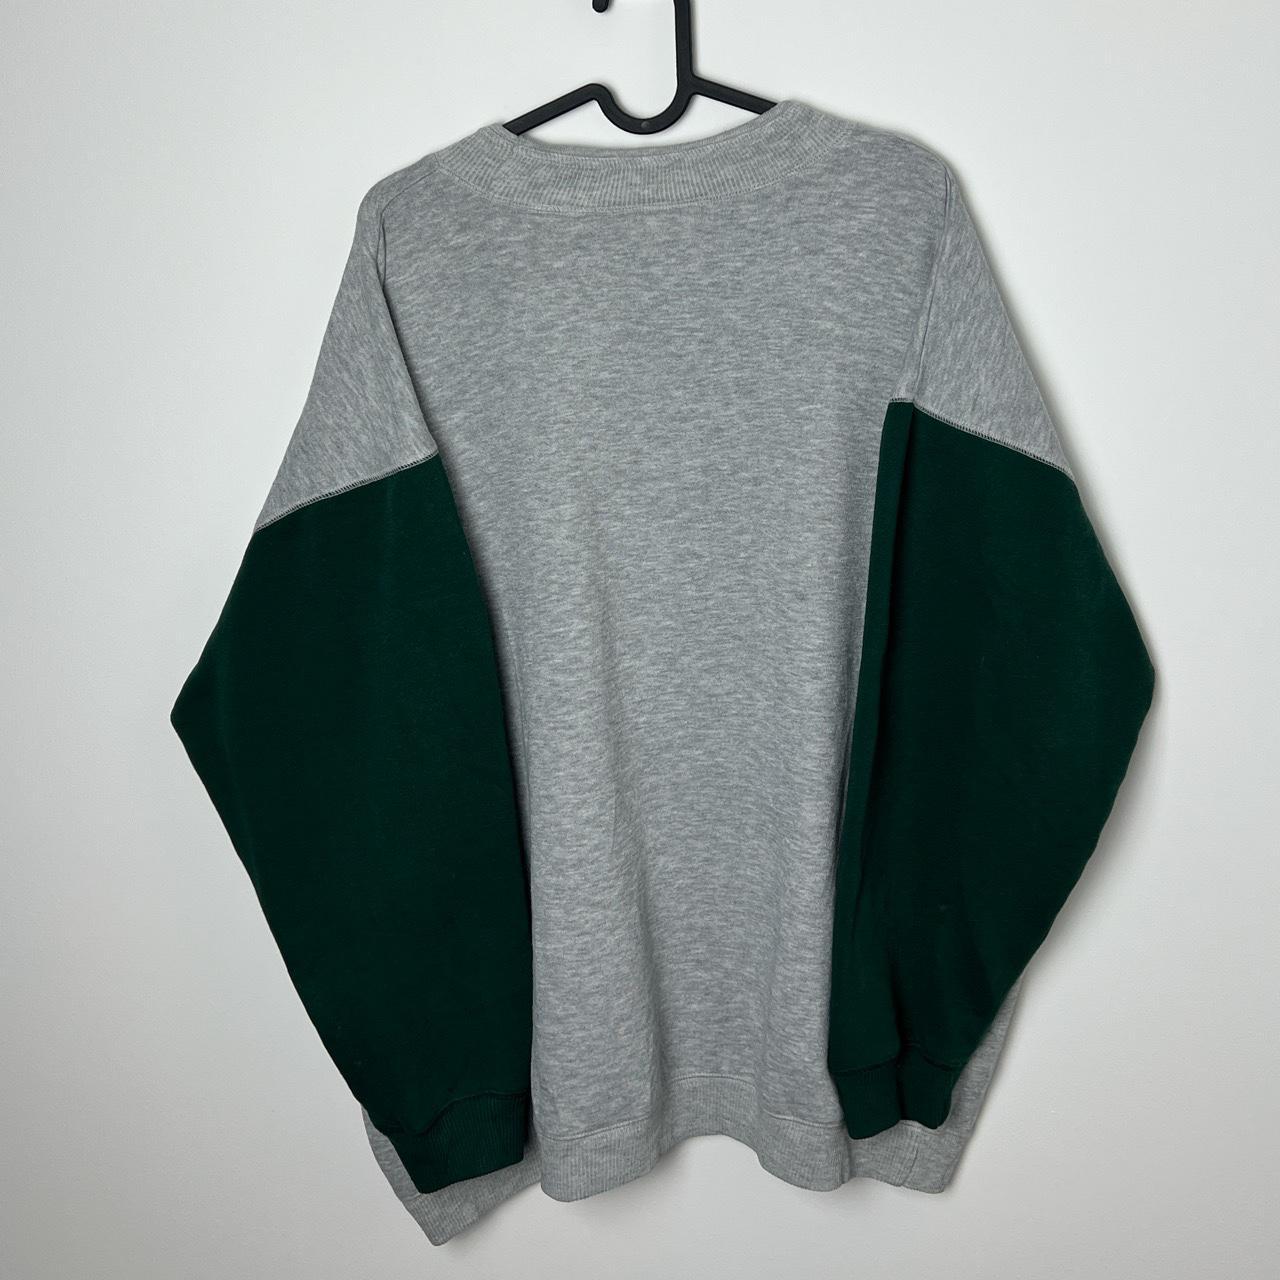 Venezia Jeans grey and green embroidered sweatshirt... - Depop